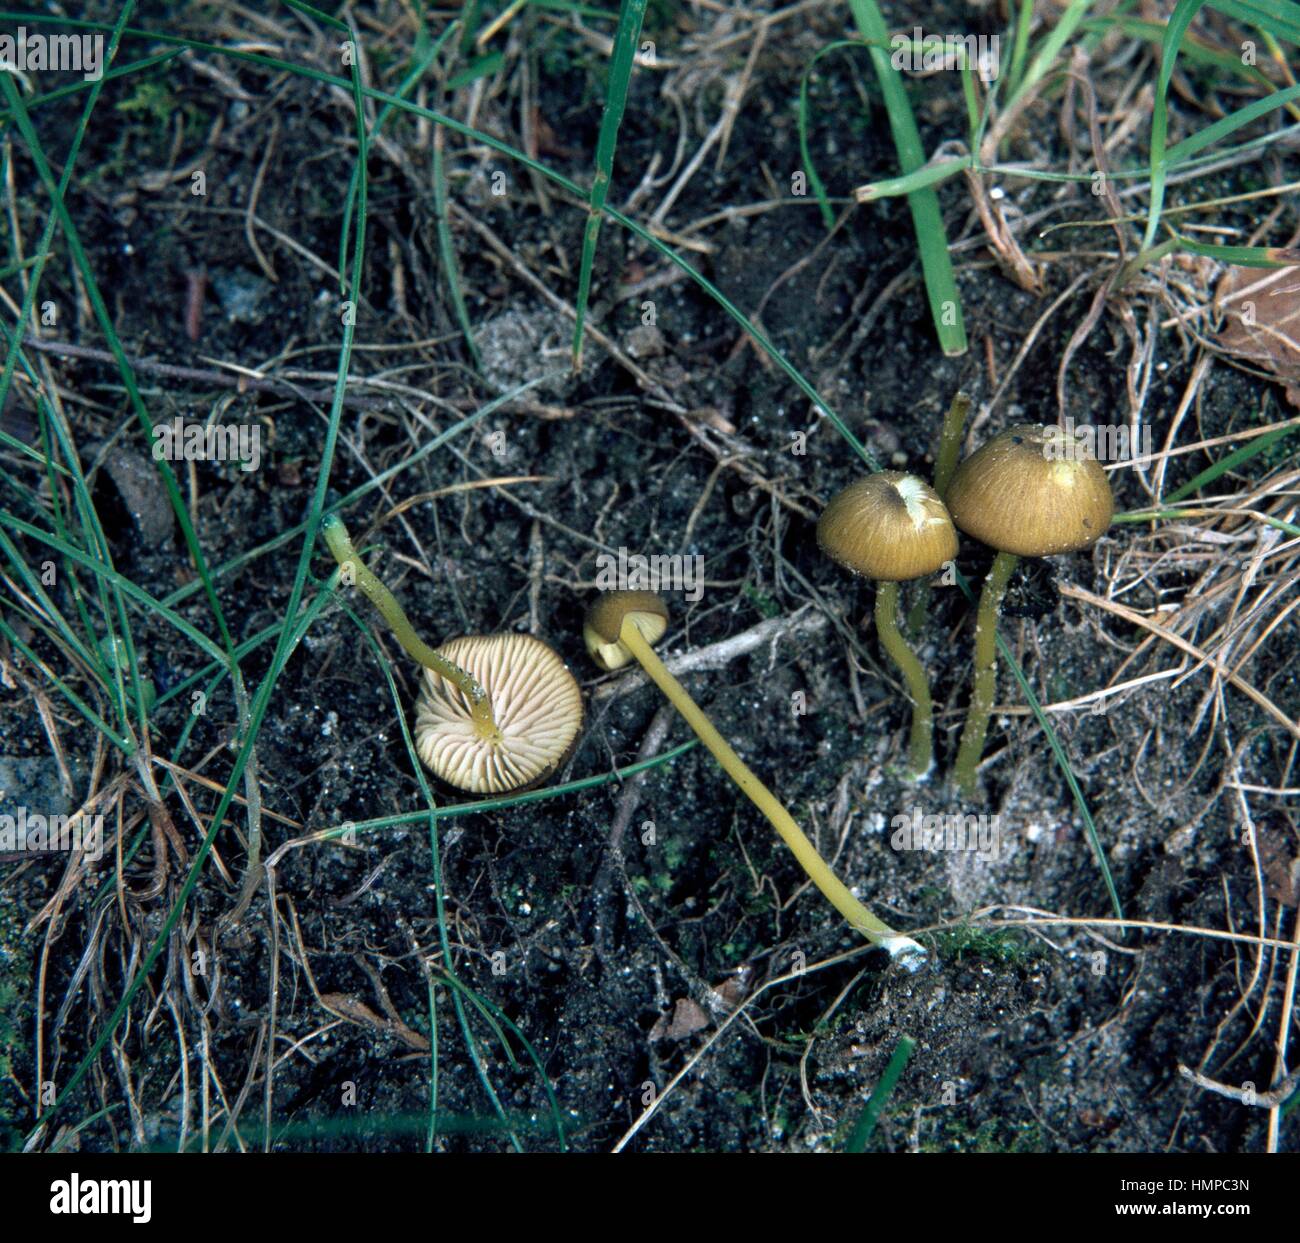 Examples of Mousepee Pinkgill (Entoloma incanum or Leptonia incana), Entolomataceae. Stock Photo